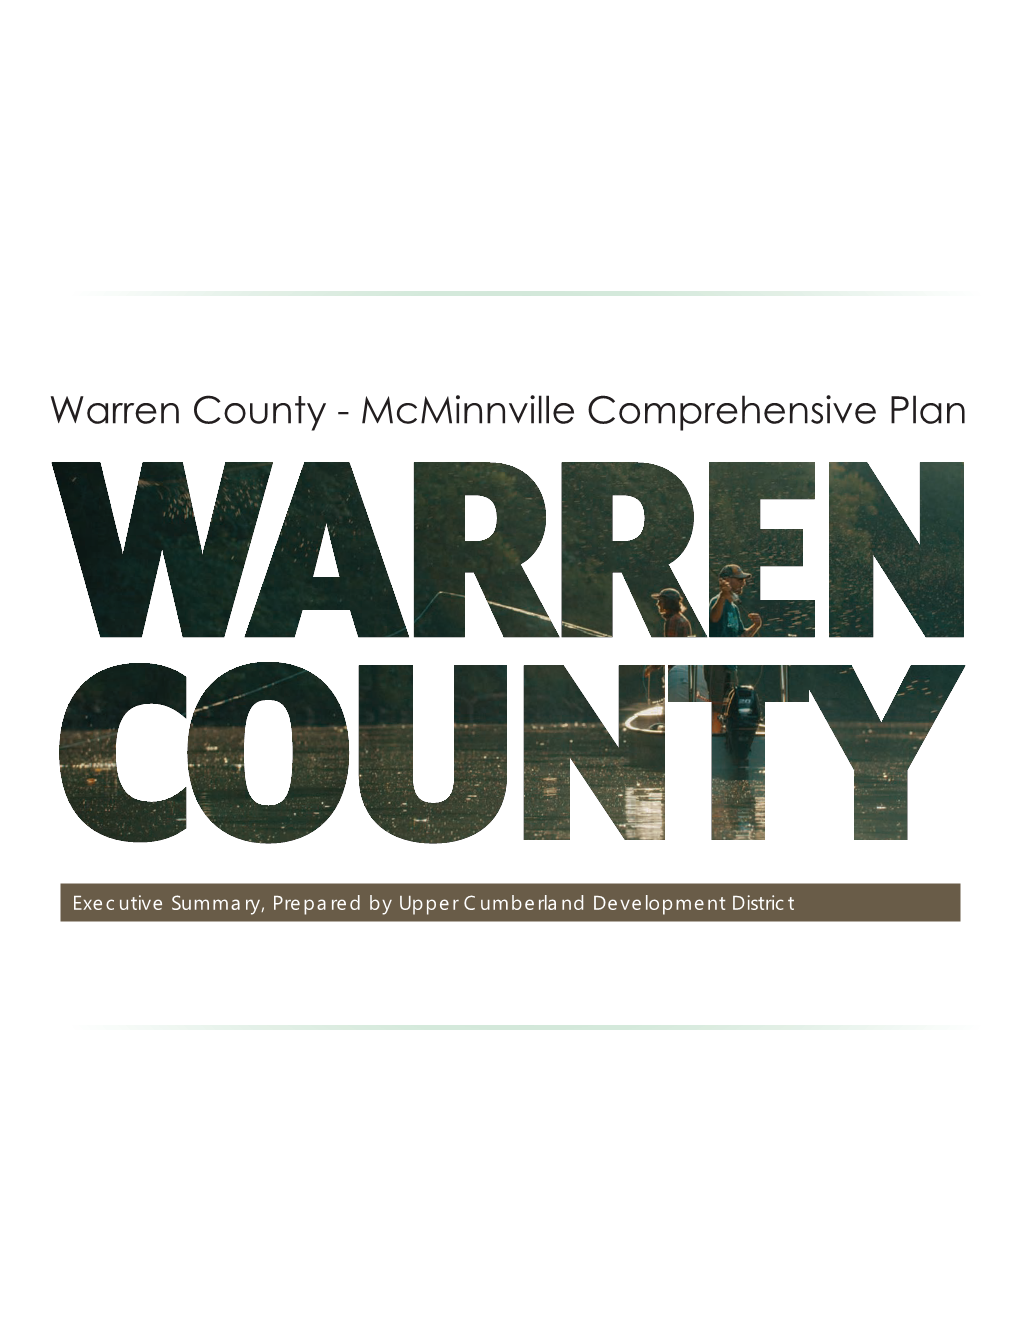 Warren County-Mcminnville Comprehensive Plan